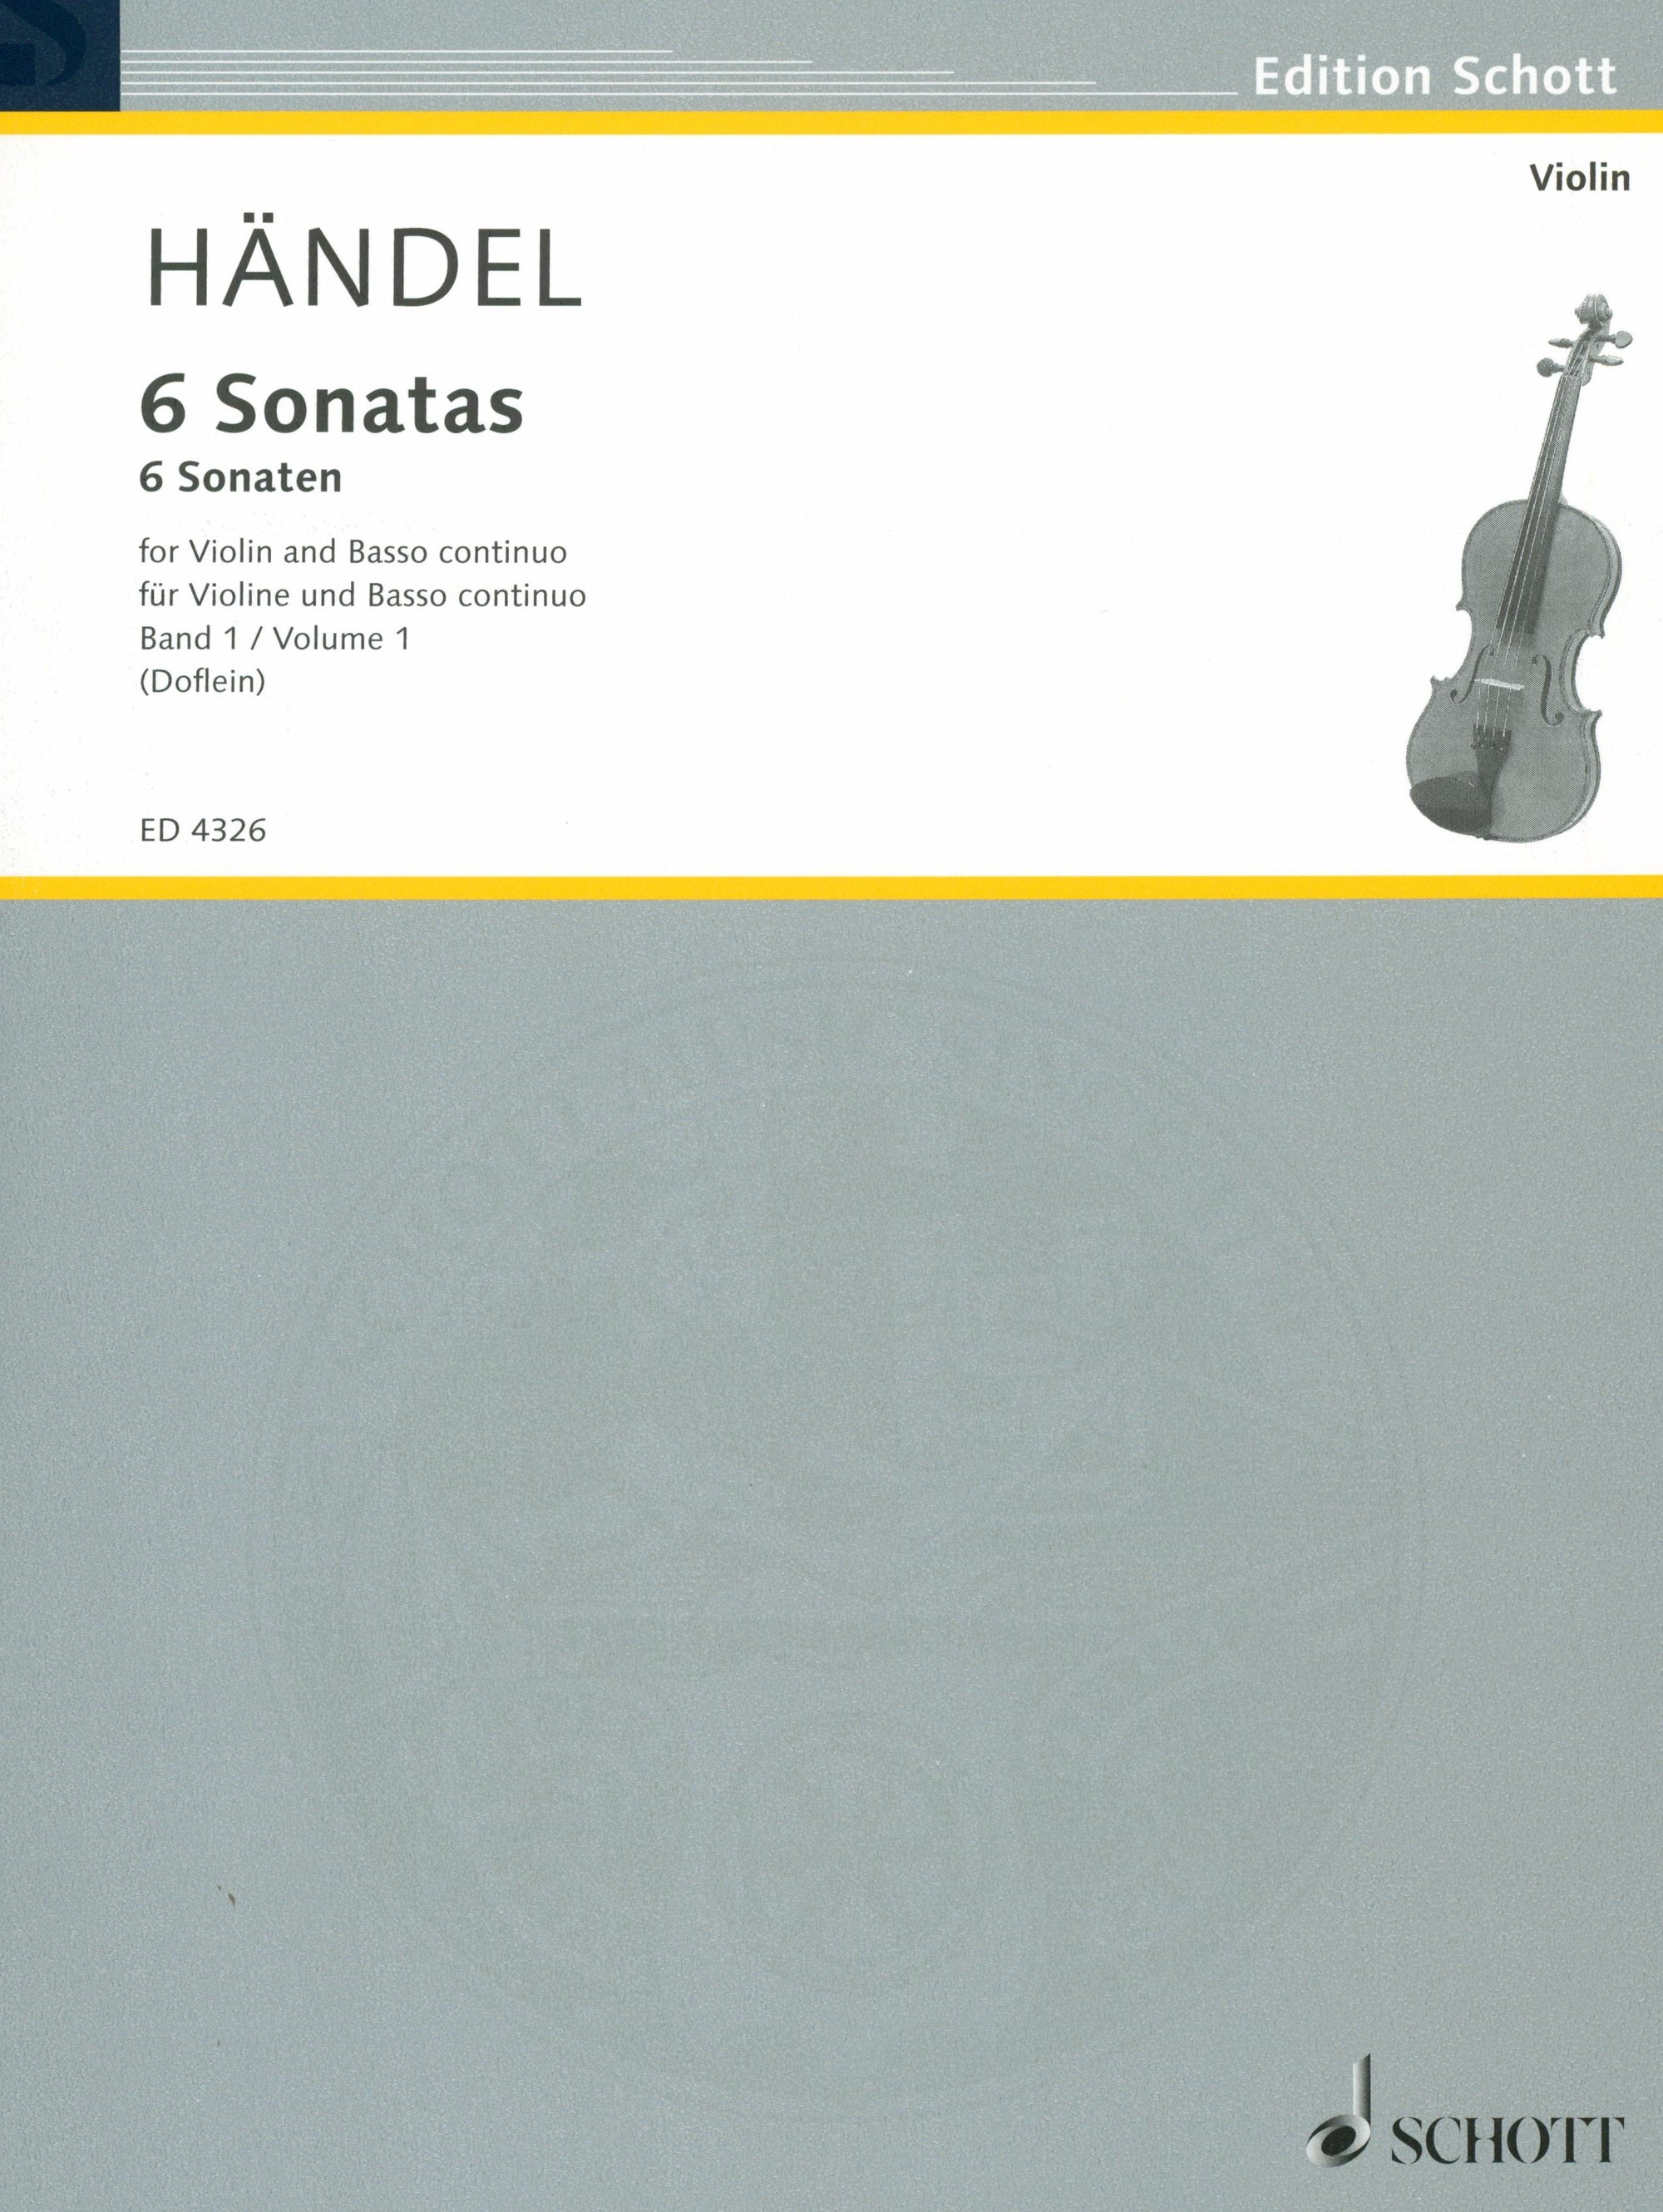 Handel: Sonatas for Violin and Basso continuo – Volume 1 (HWV 372, 373, 370)